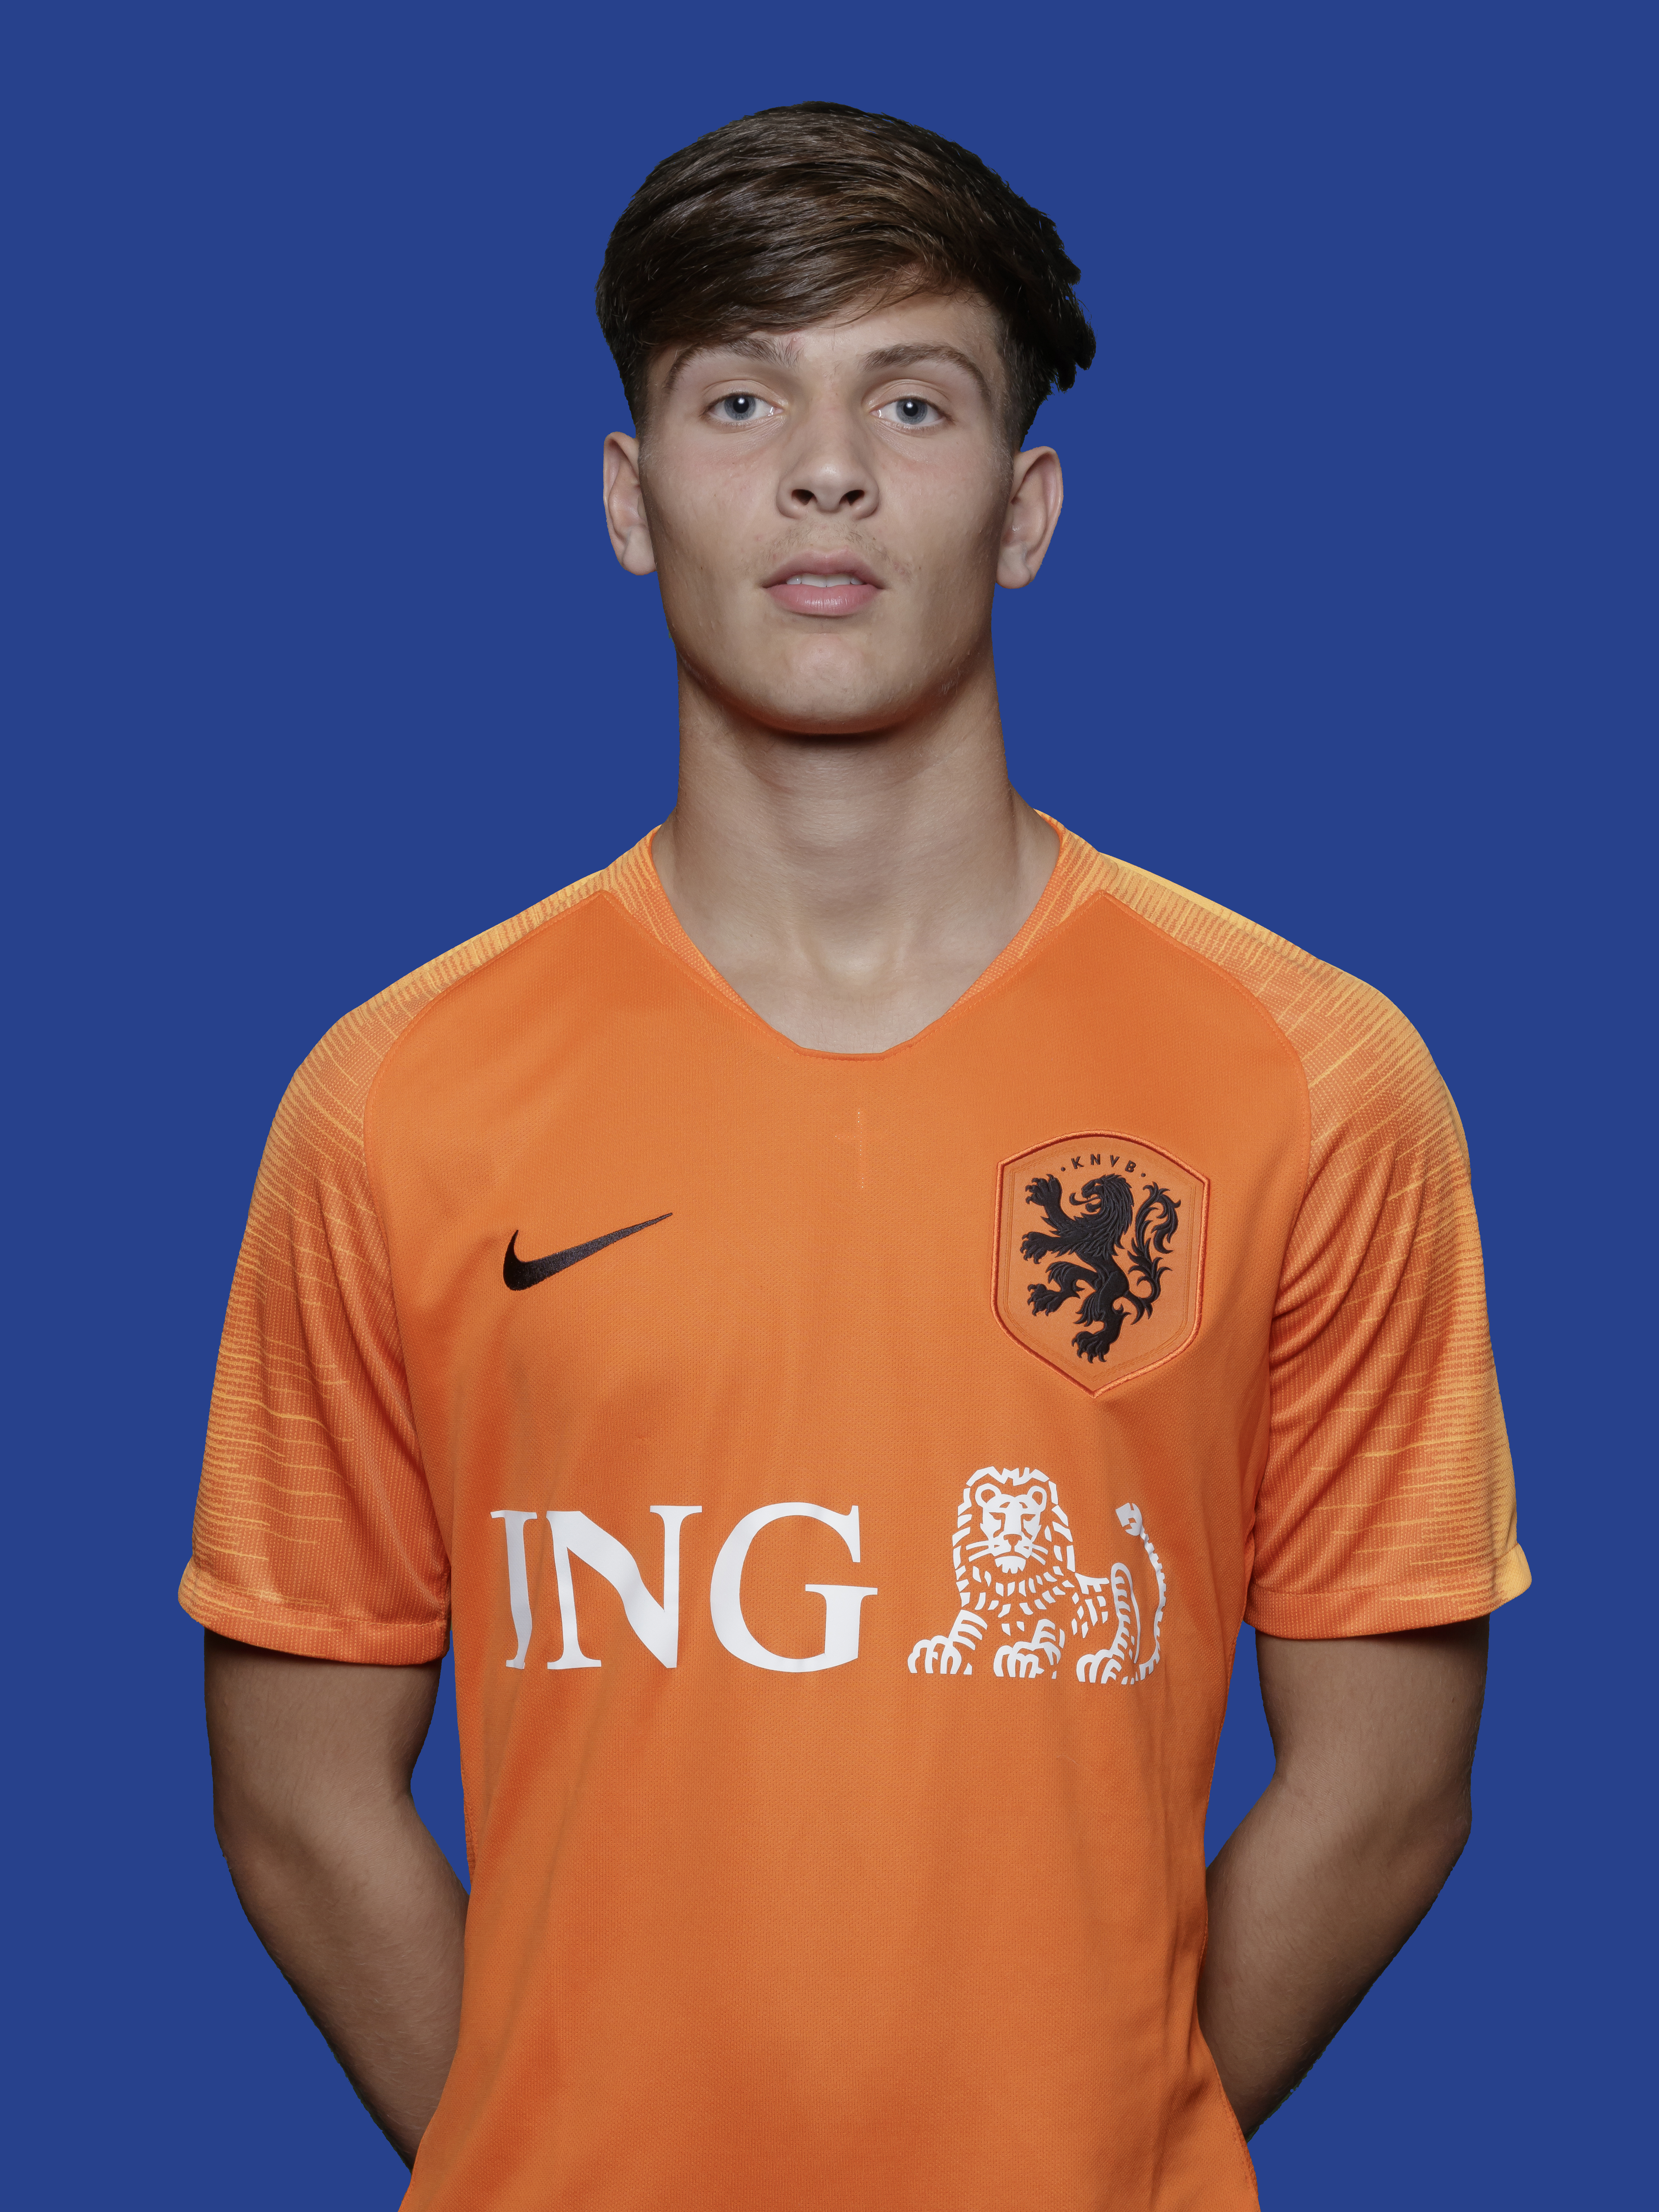 OnsOranje - KNVB Ons Oranje Avatar - Powered by DataID Company Nederland